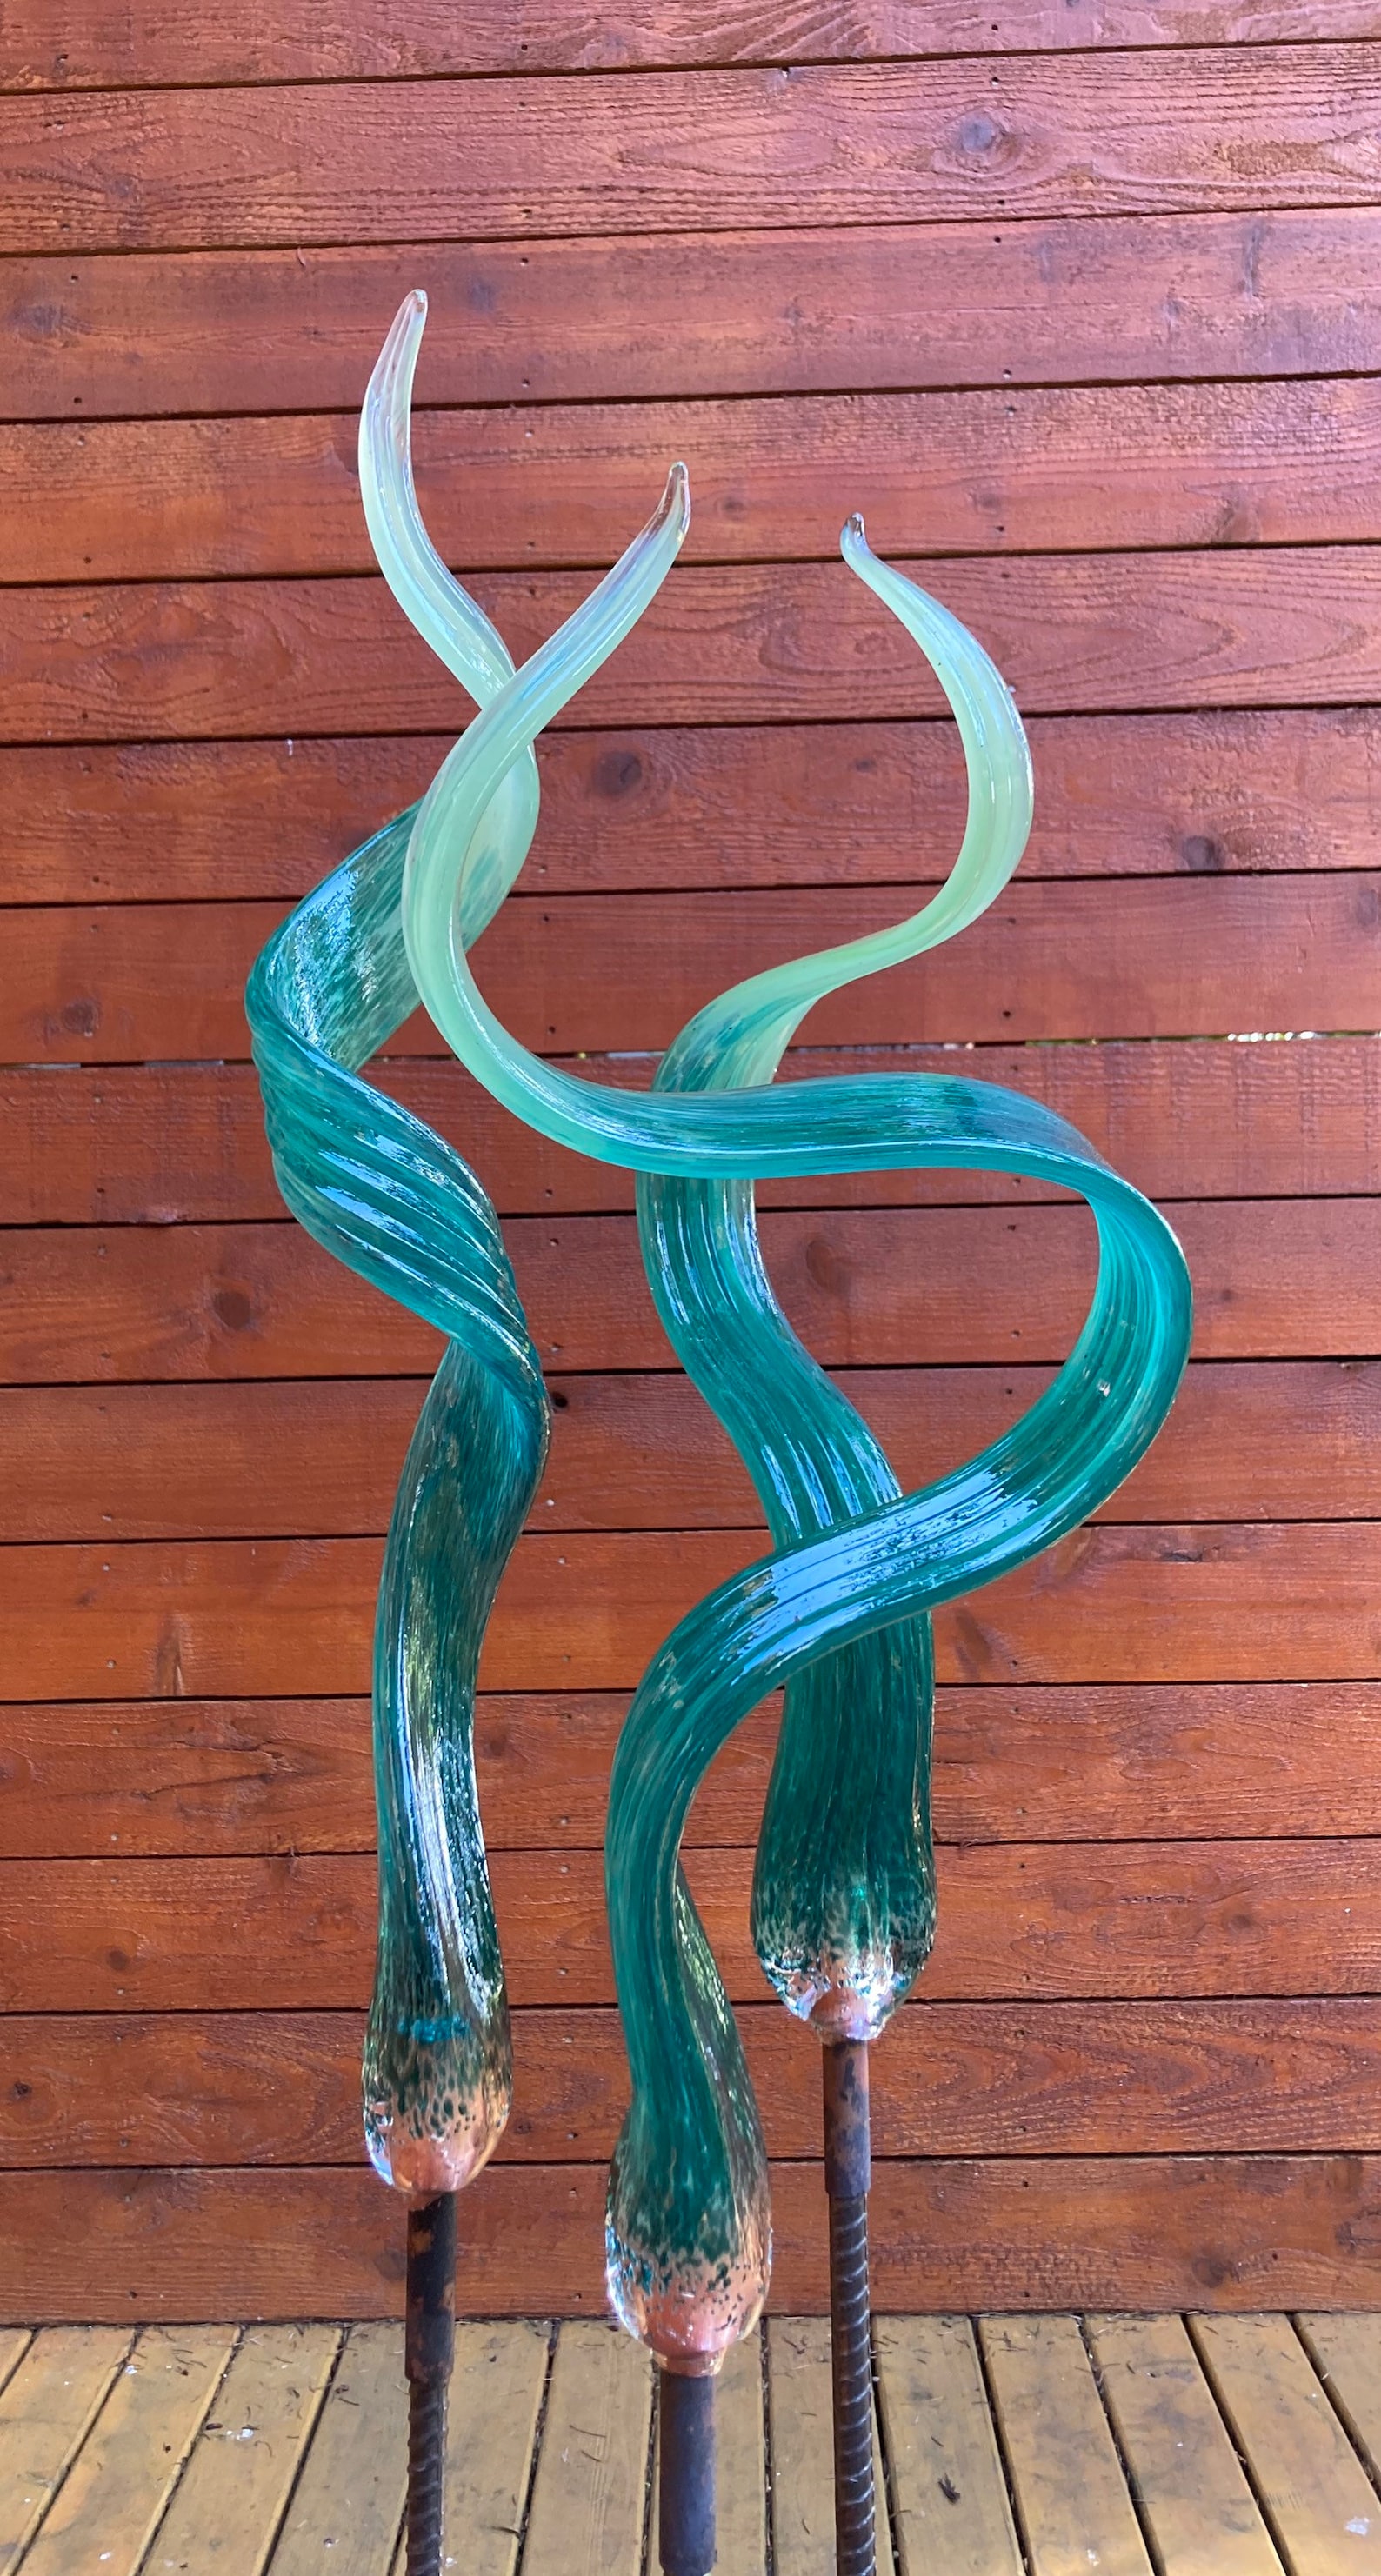 Hand Made Hand Blown Glass Garden Art Yard Art Turquoise Etsy